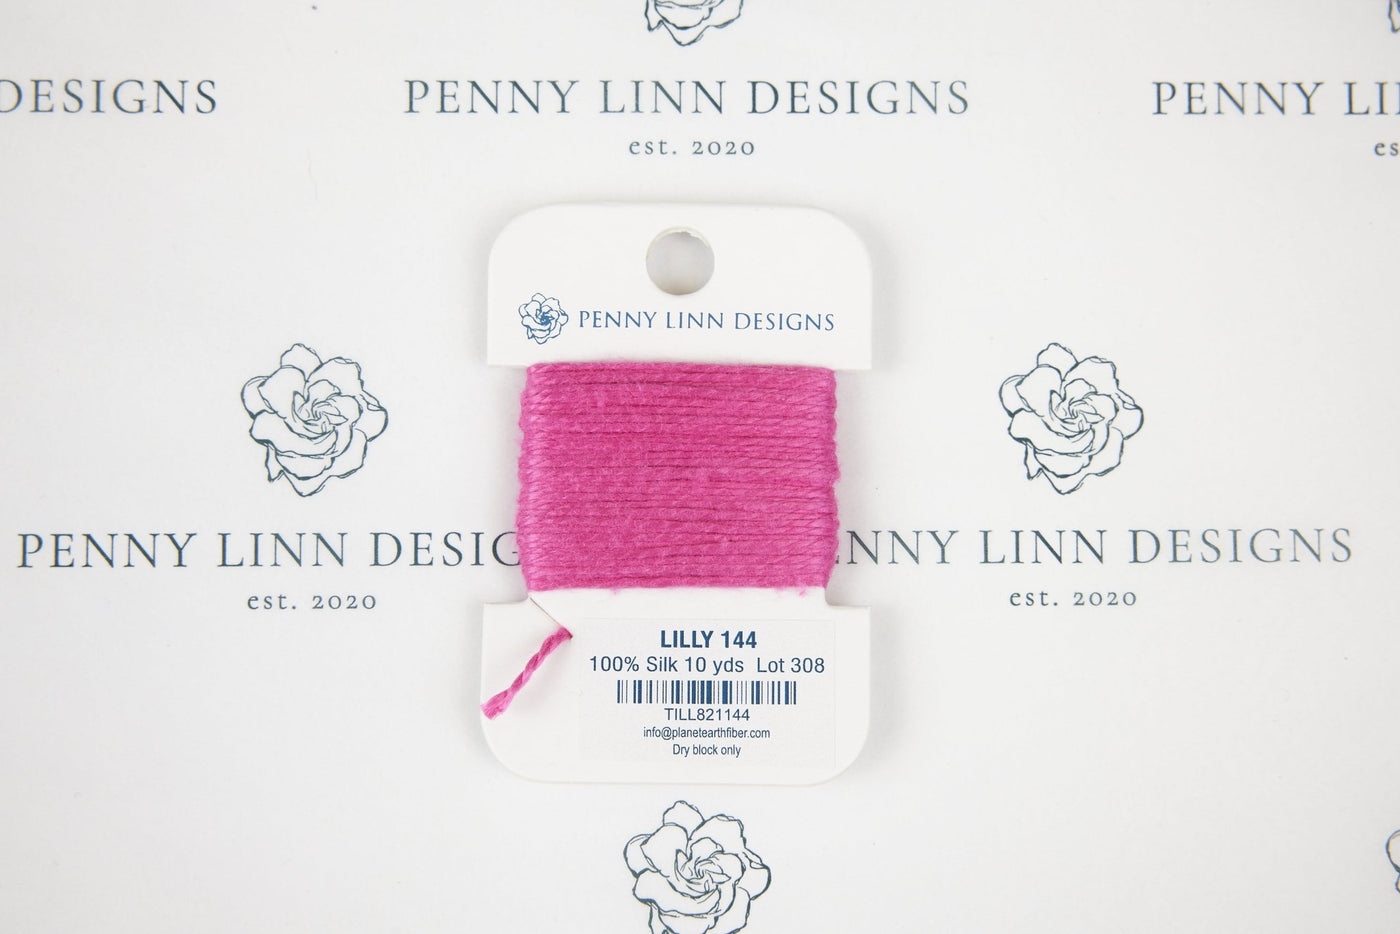 Planet Earth Silk Card - 144 Lilly - Penny Linn Designs - Planet Earth Fibers